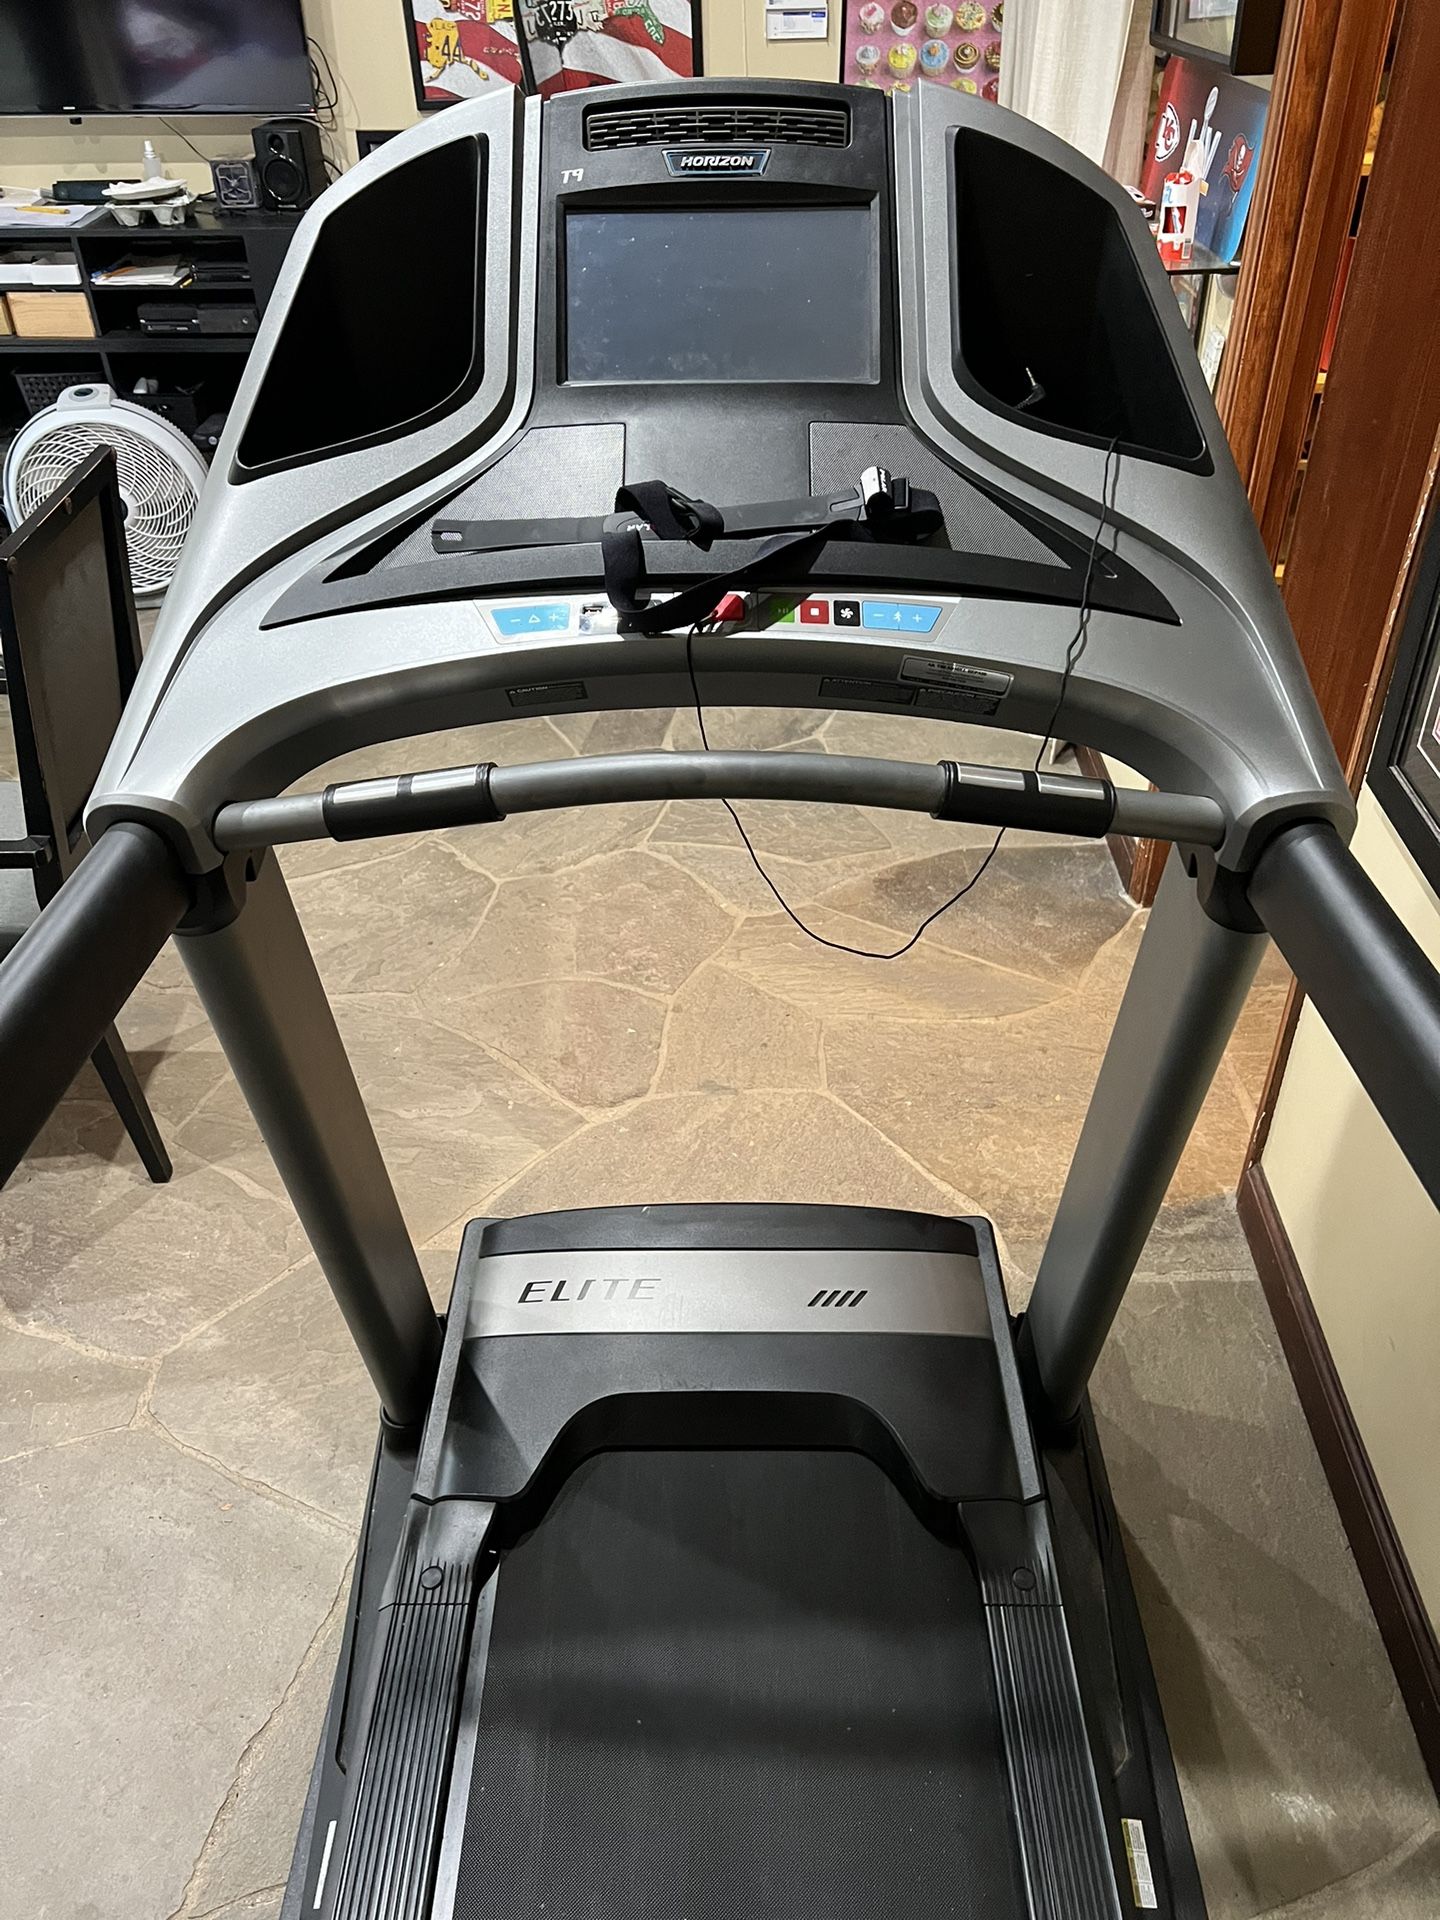 Treadmill-Vision – Horizon T9 Elite